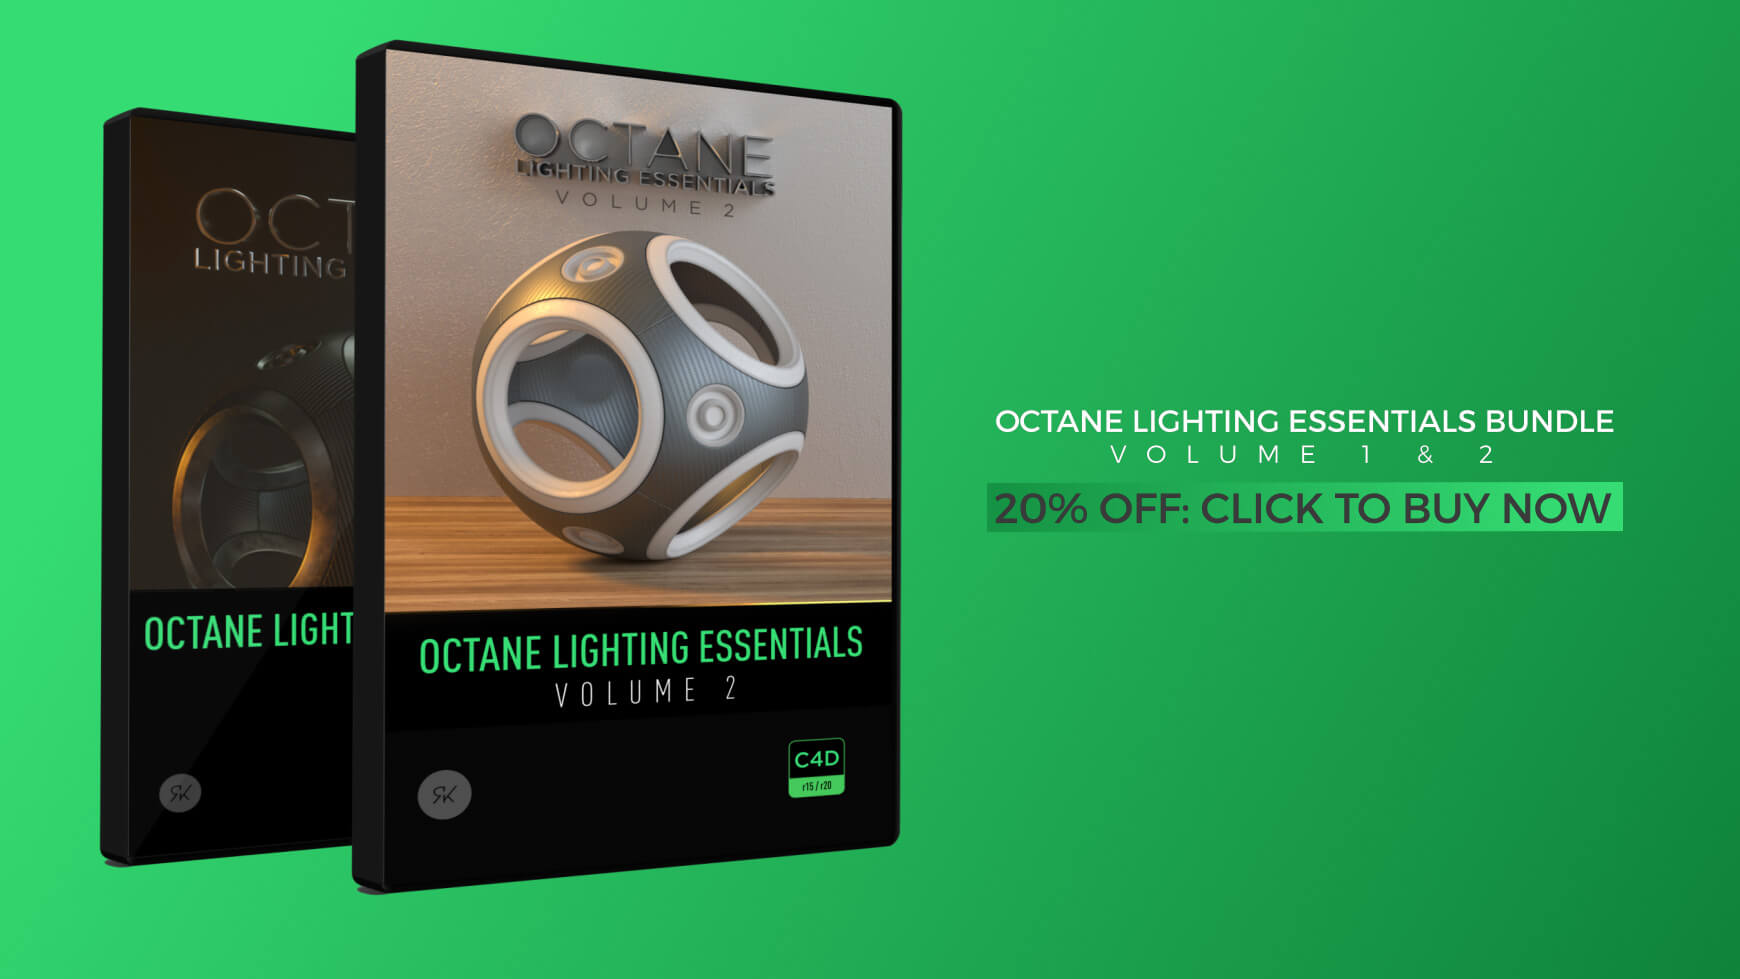 Octane Lighting Essentials Bundle